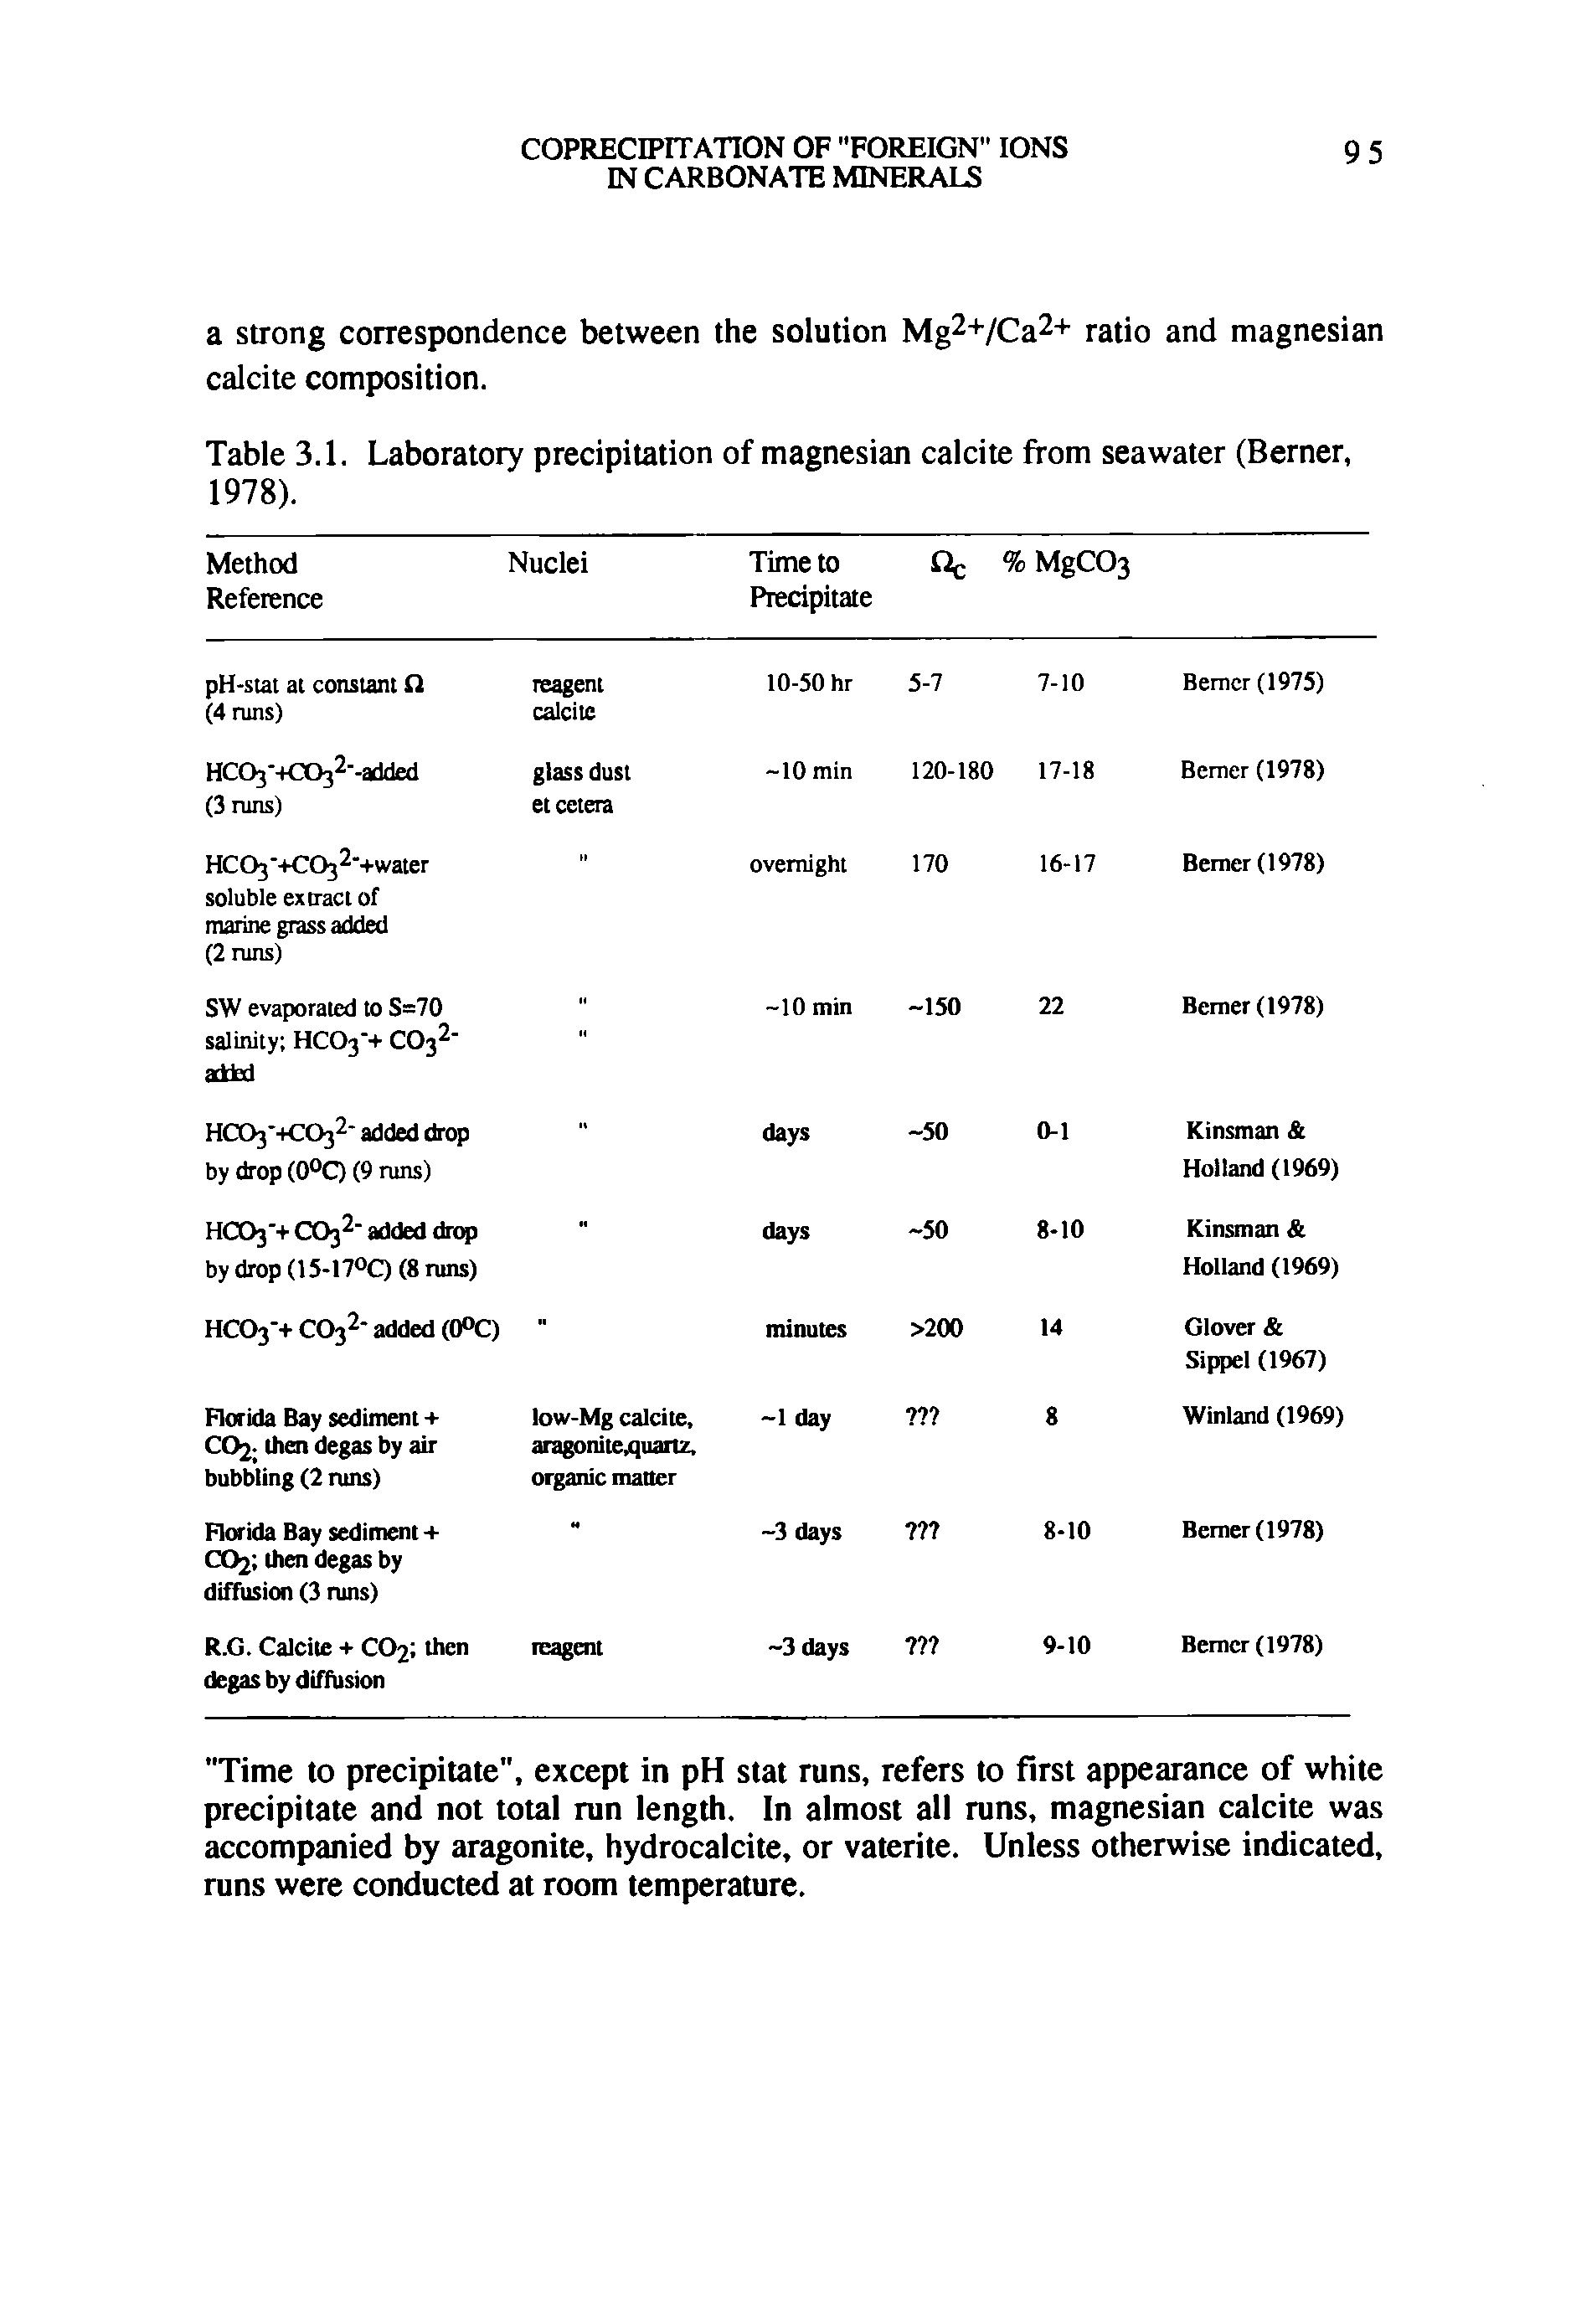 Table 3.1. Laboratory precipitation of magnesian calcite from seawater (Berner, 1978).